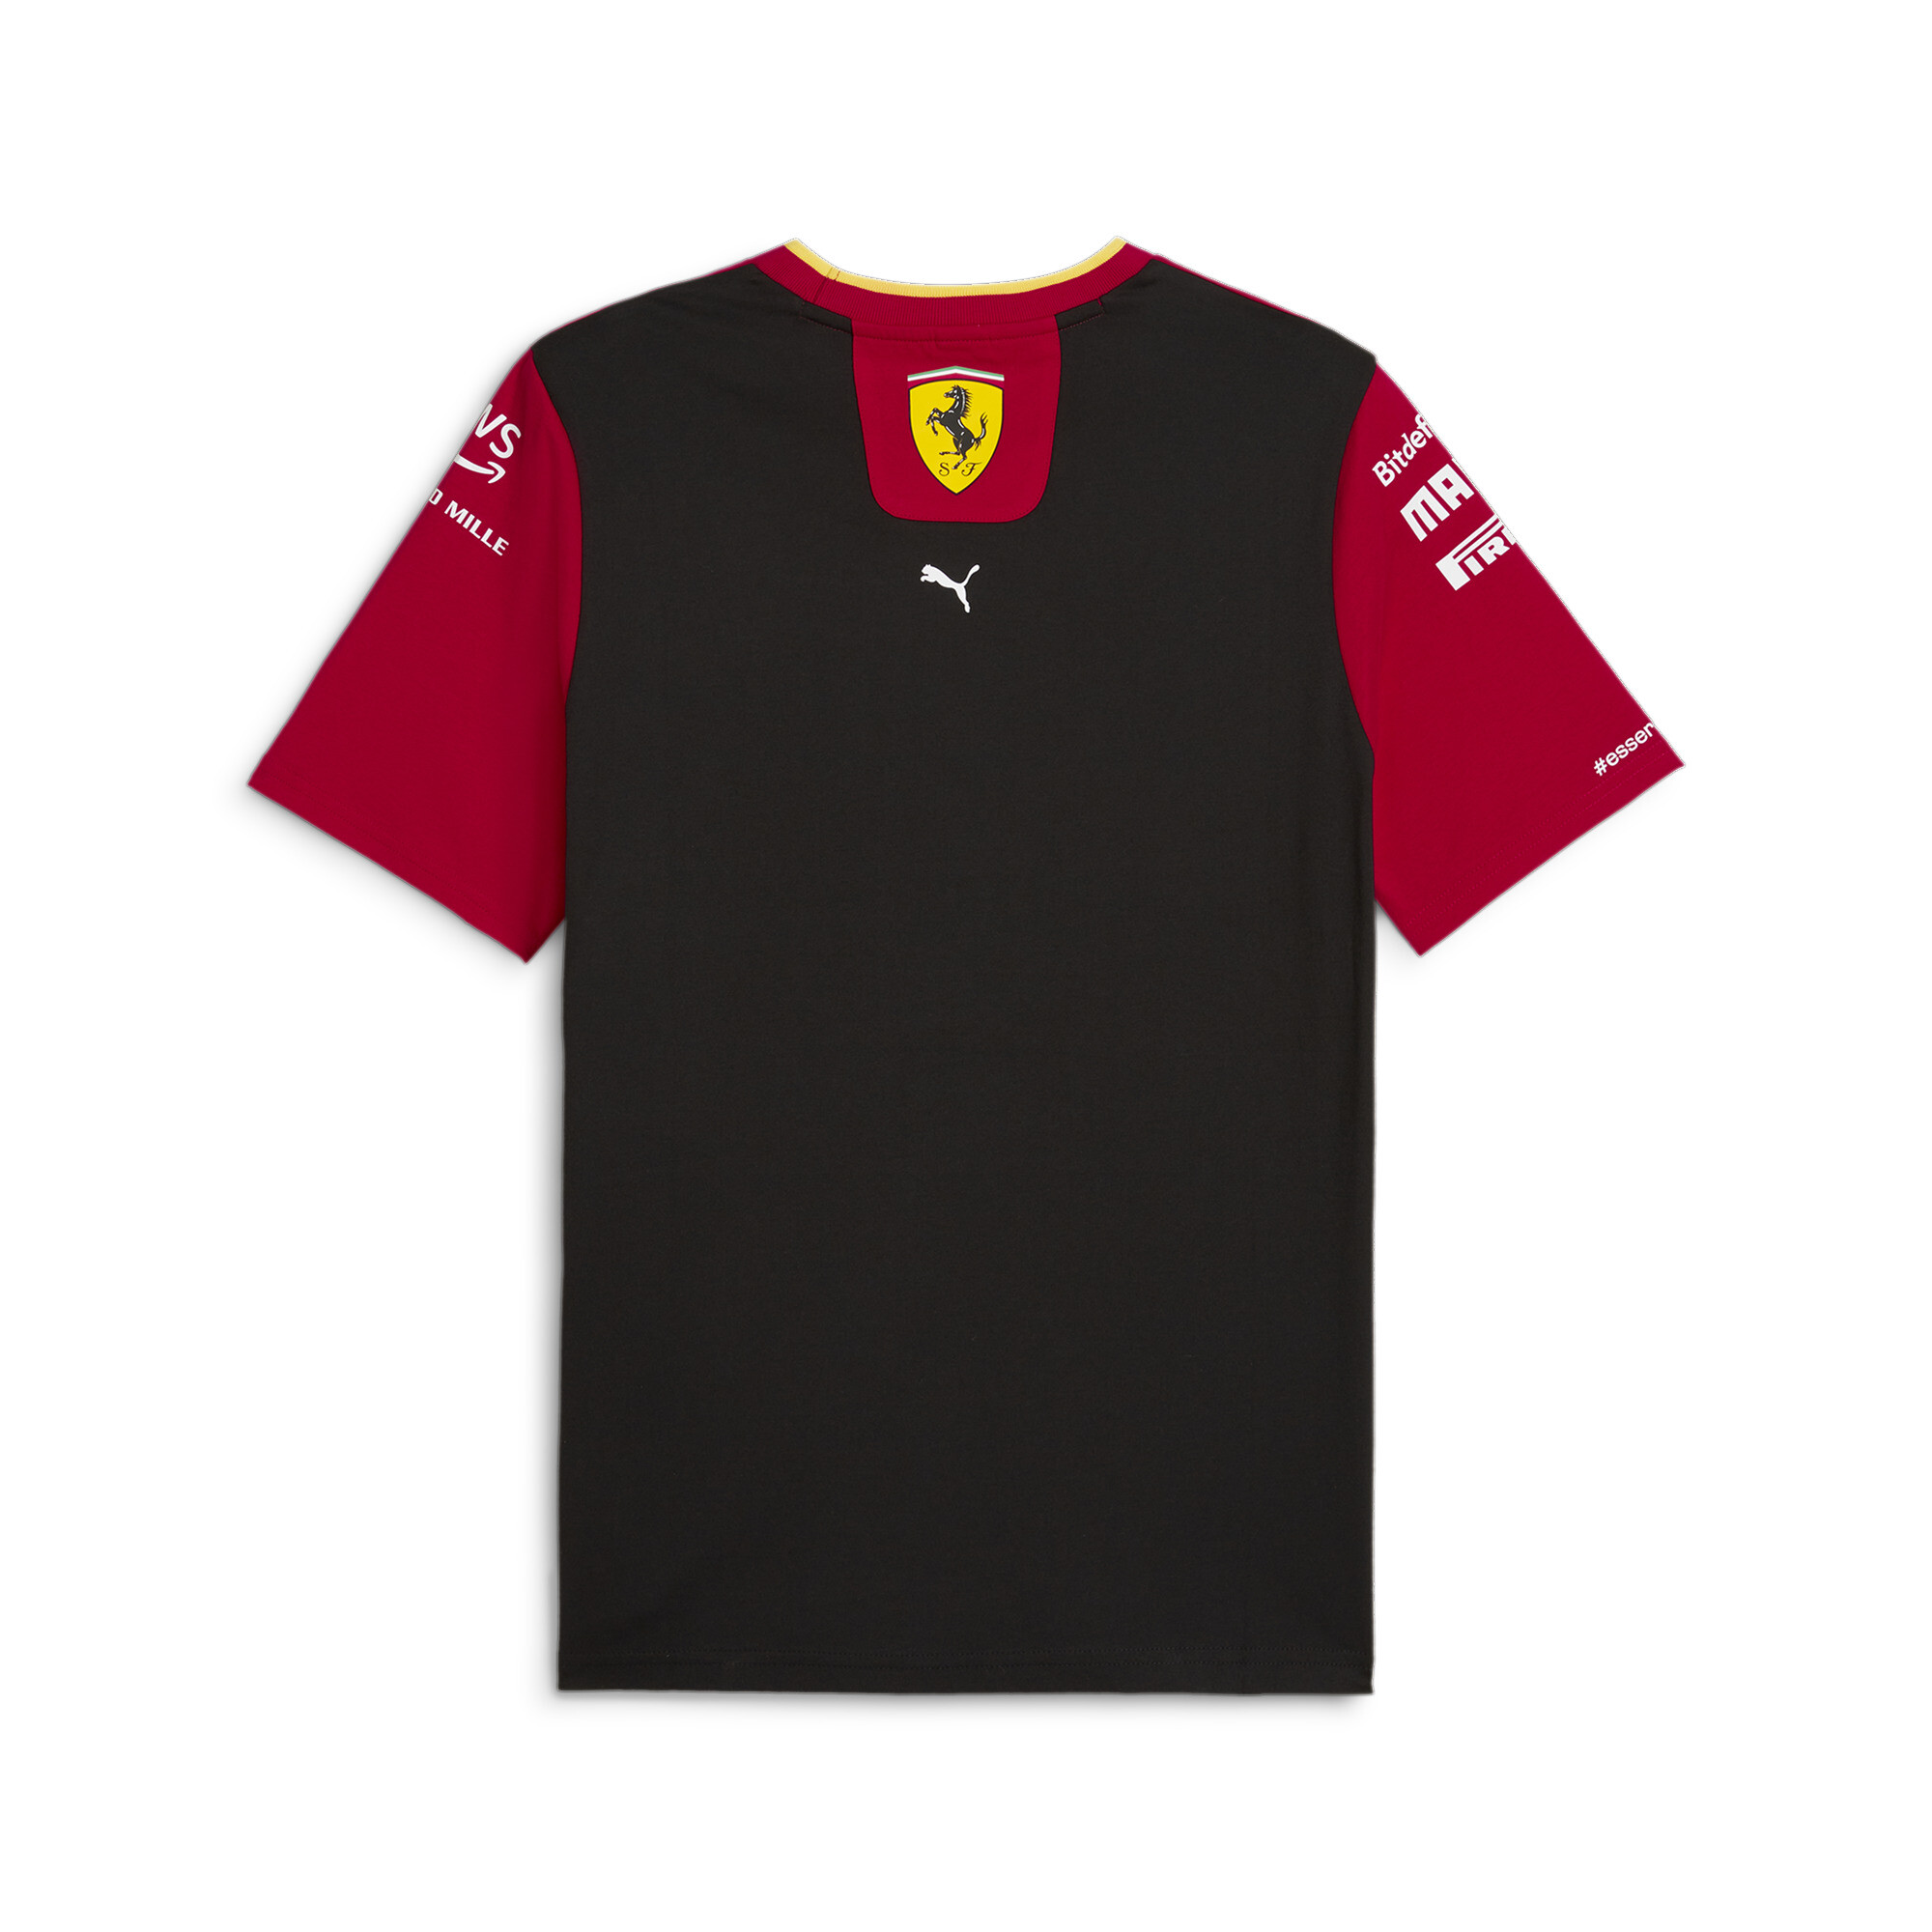 Men's Puma Scuderia Ferrari Special Edition Monza T-Shirt, Red, Size S, Clothing